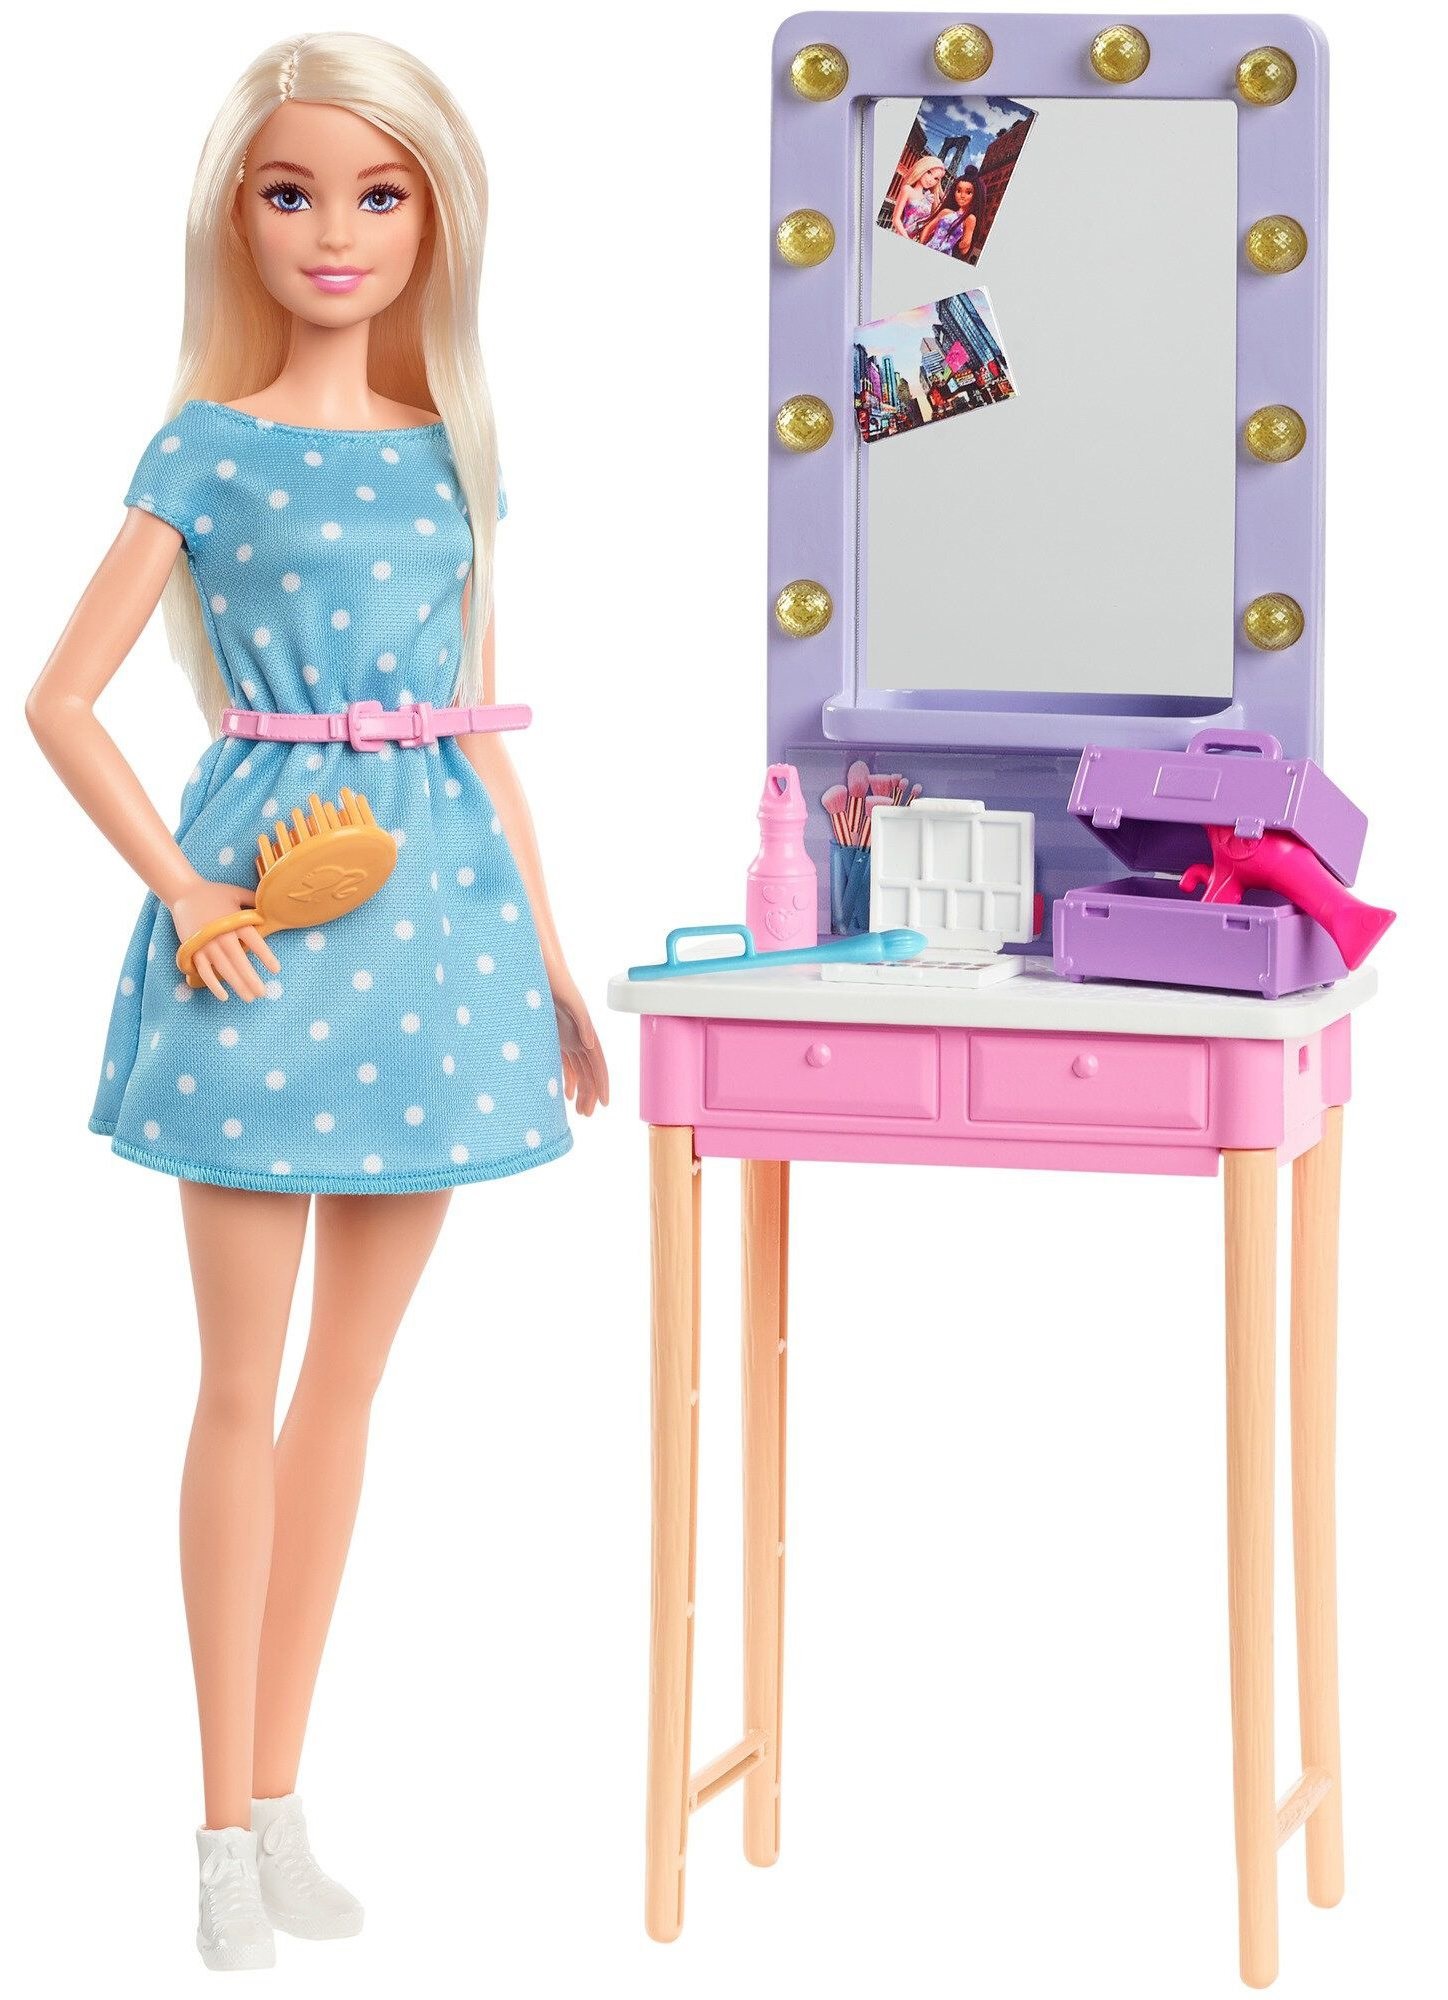 Barbie Big City Big Dreams Lalka Malibu z toaletką Mattel GYG38 GYG39